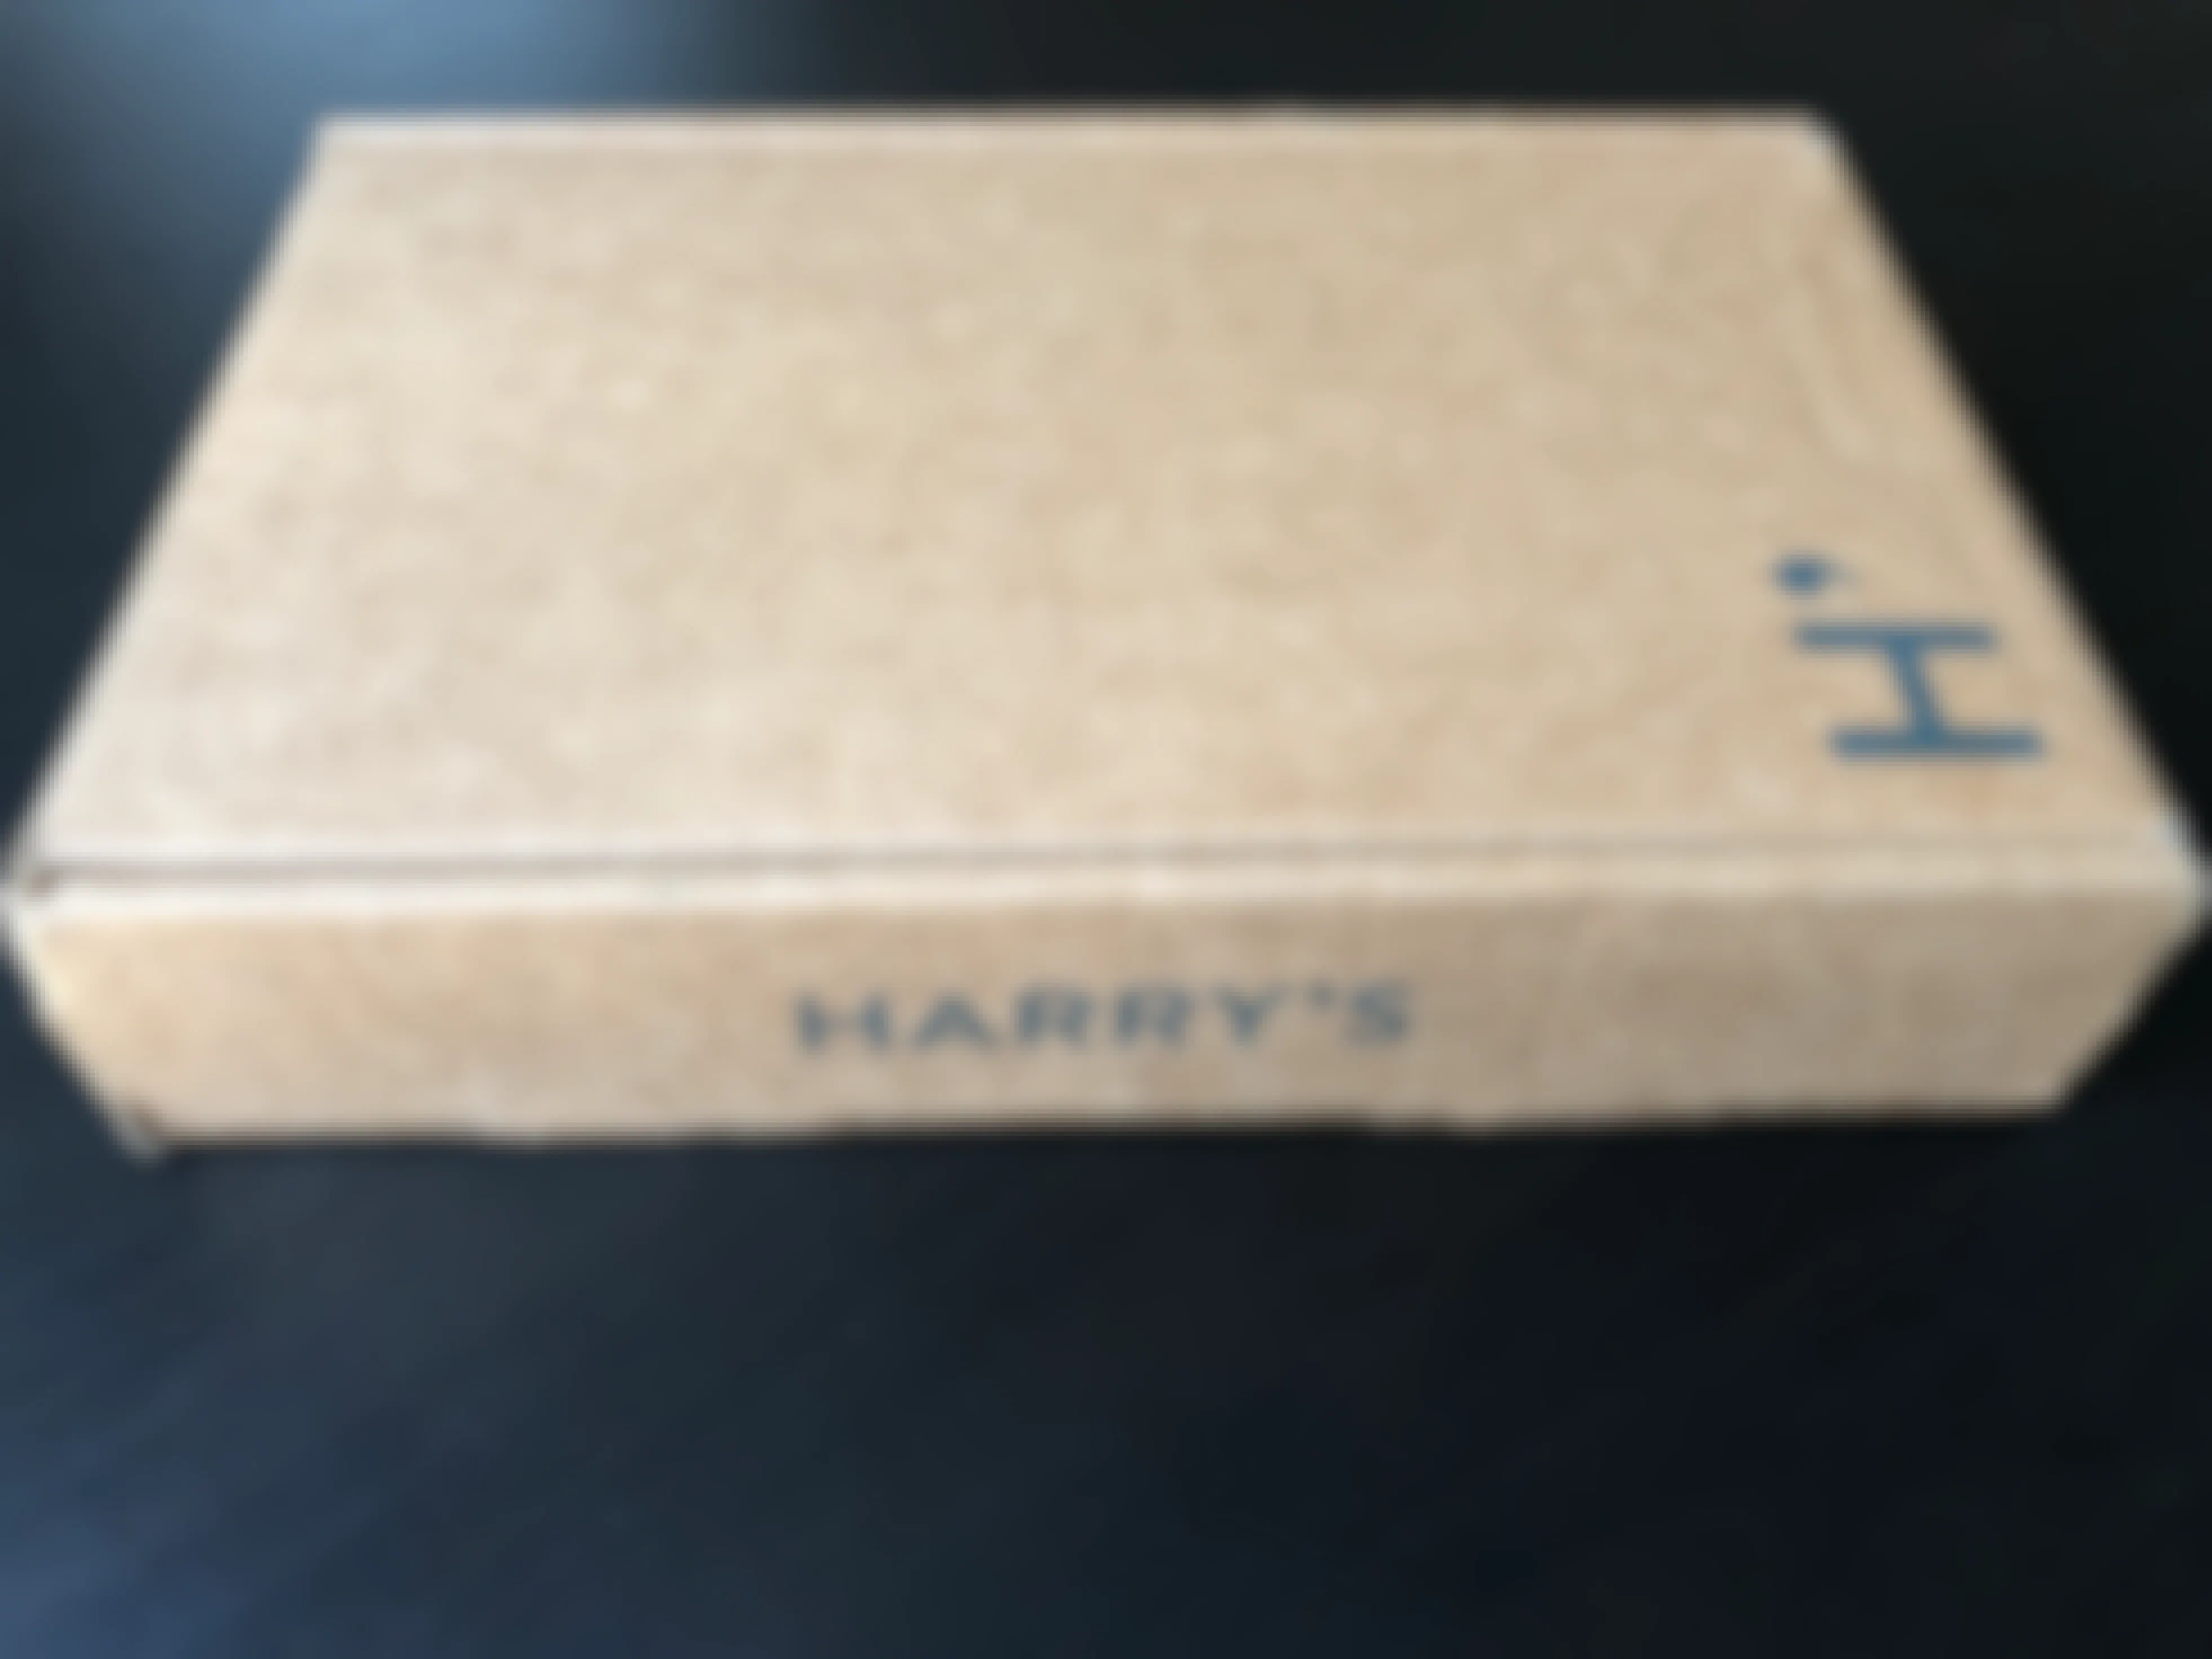 Harry's starter kit box unopened on a black table.